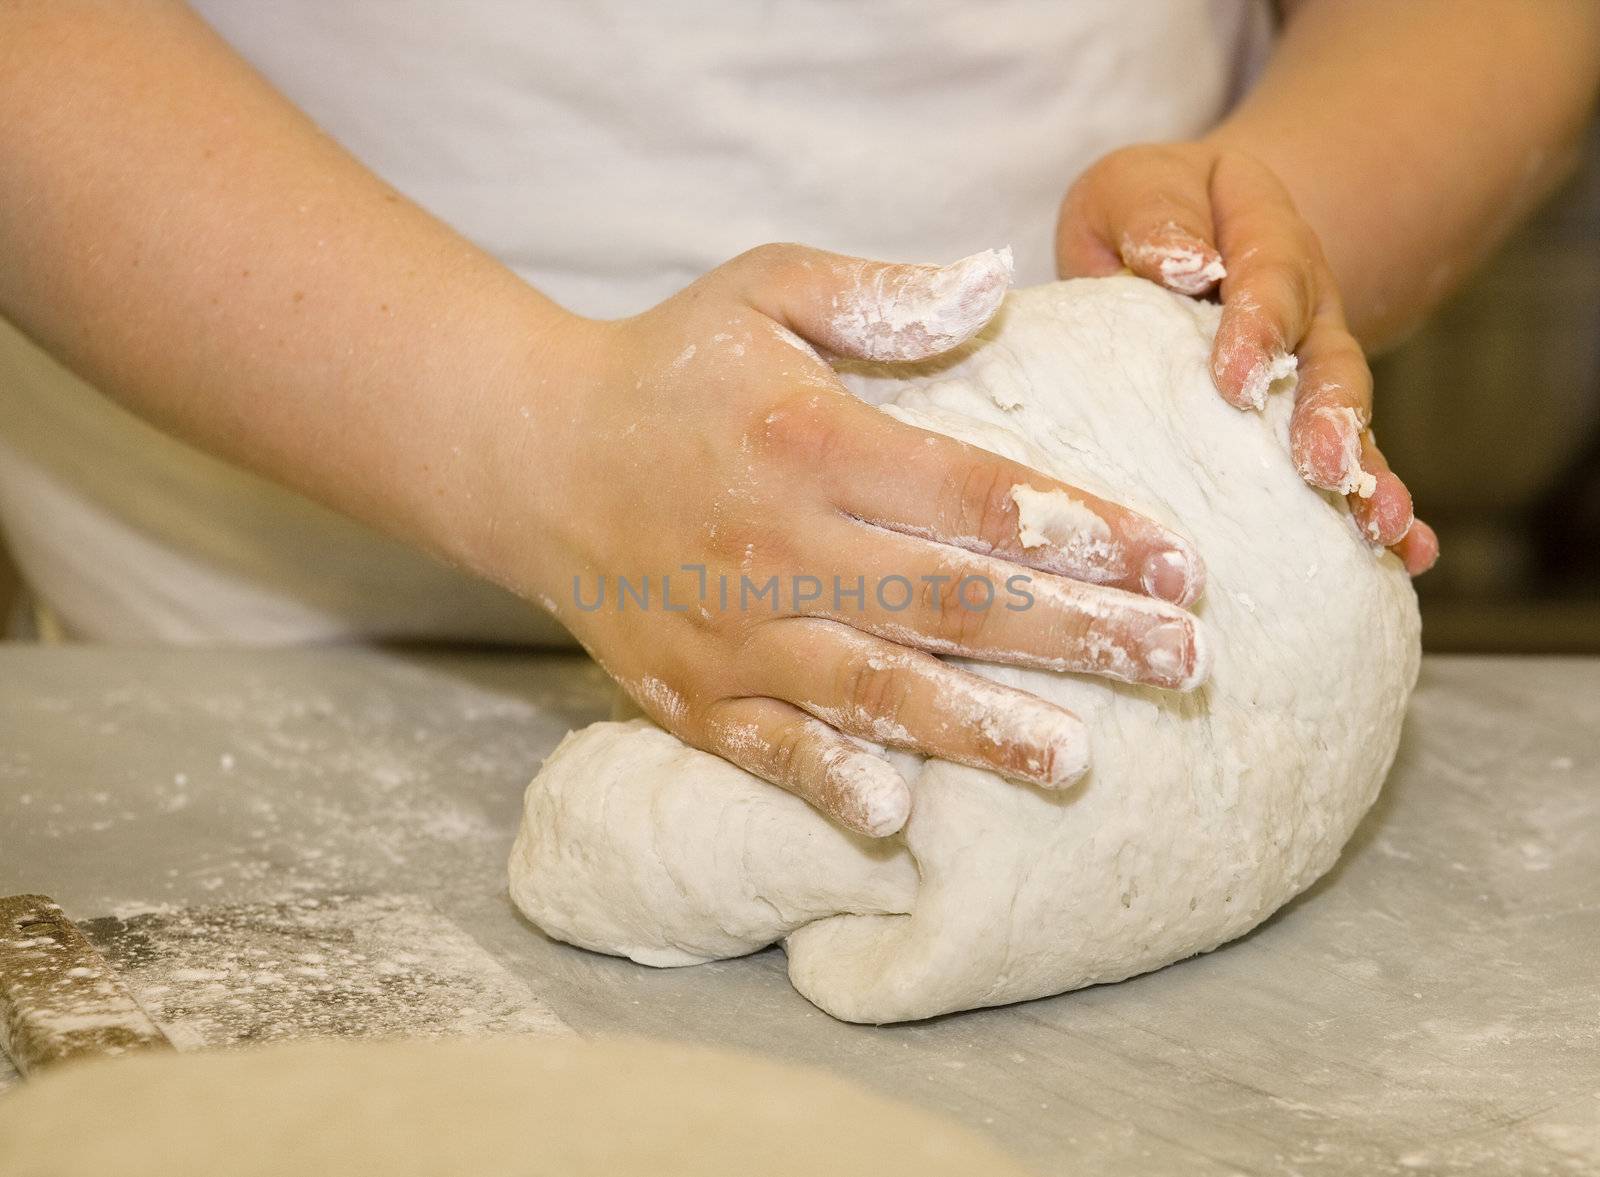 Kneading Dough by gemenacom